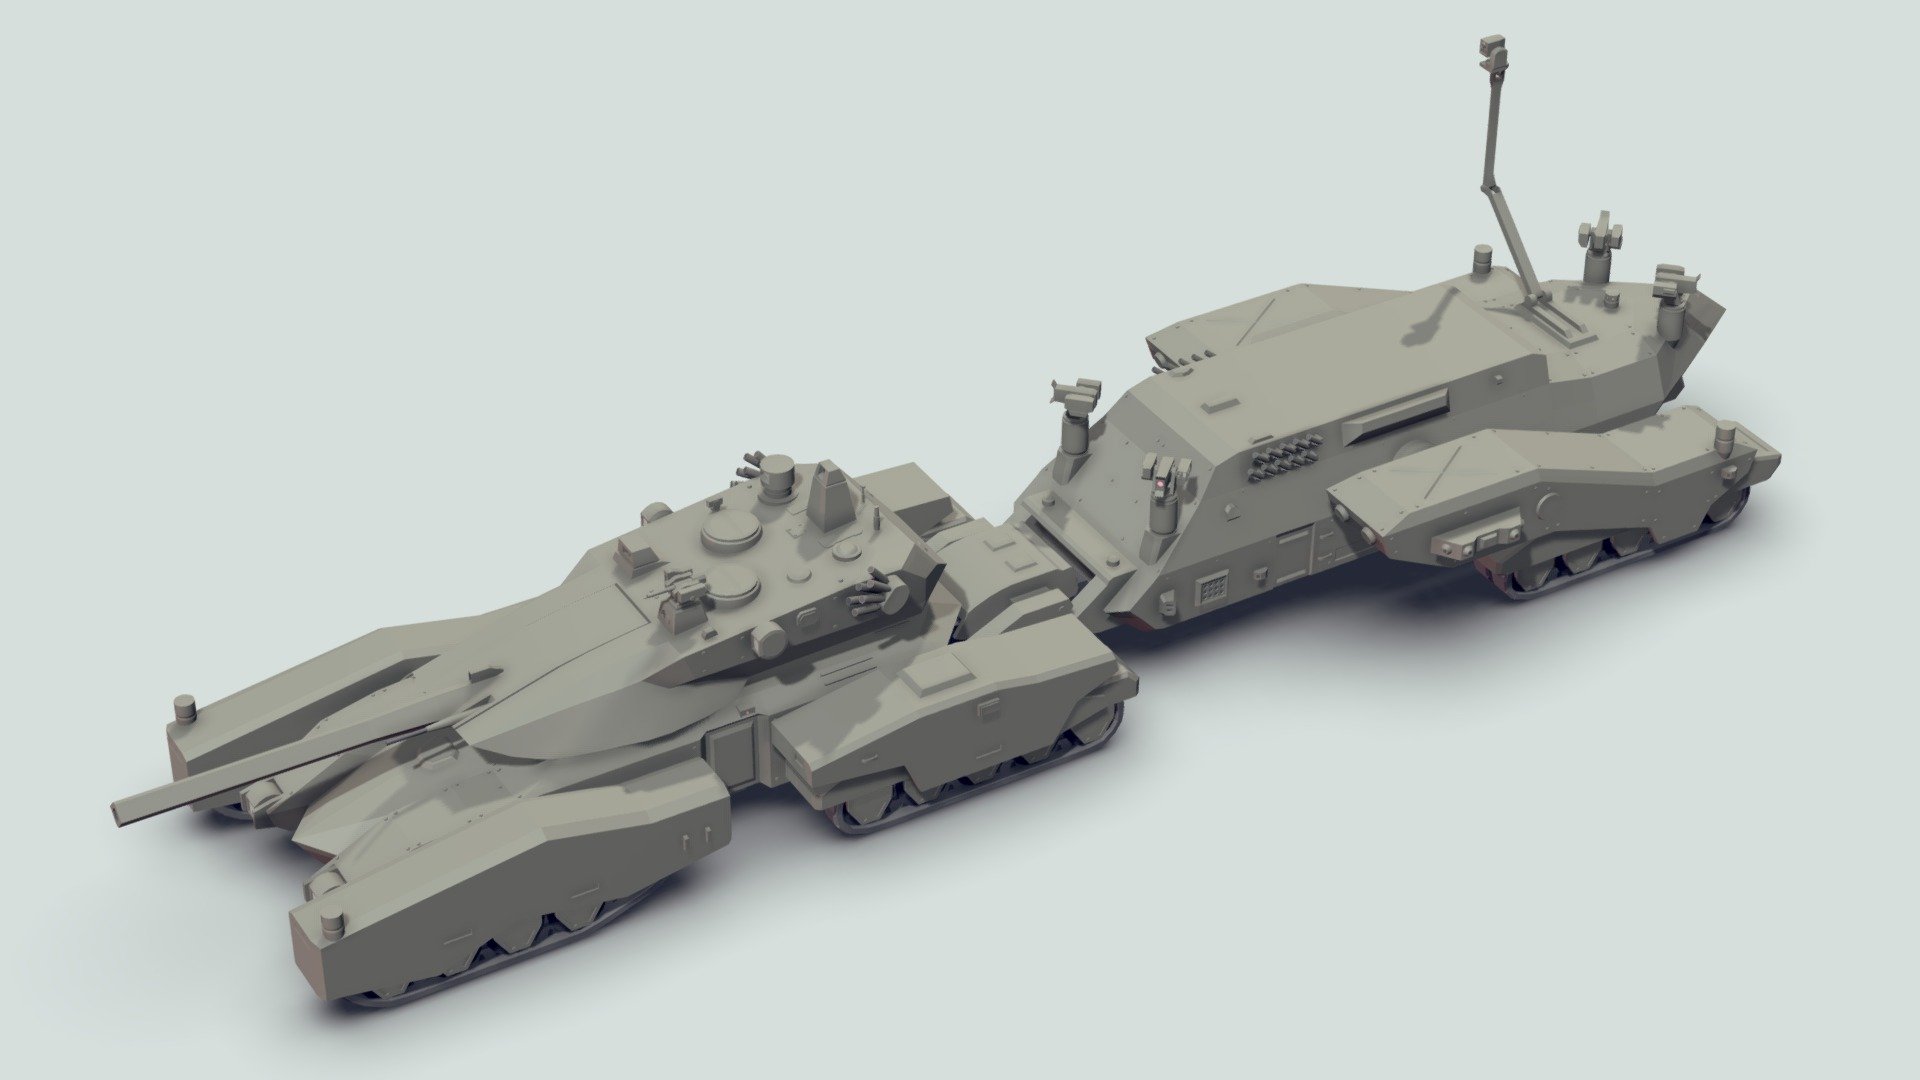 Dreadnought - 3D model by 2 3 1 2 2 5 (@231225) [dfc5551] - Sketchfab